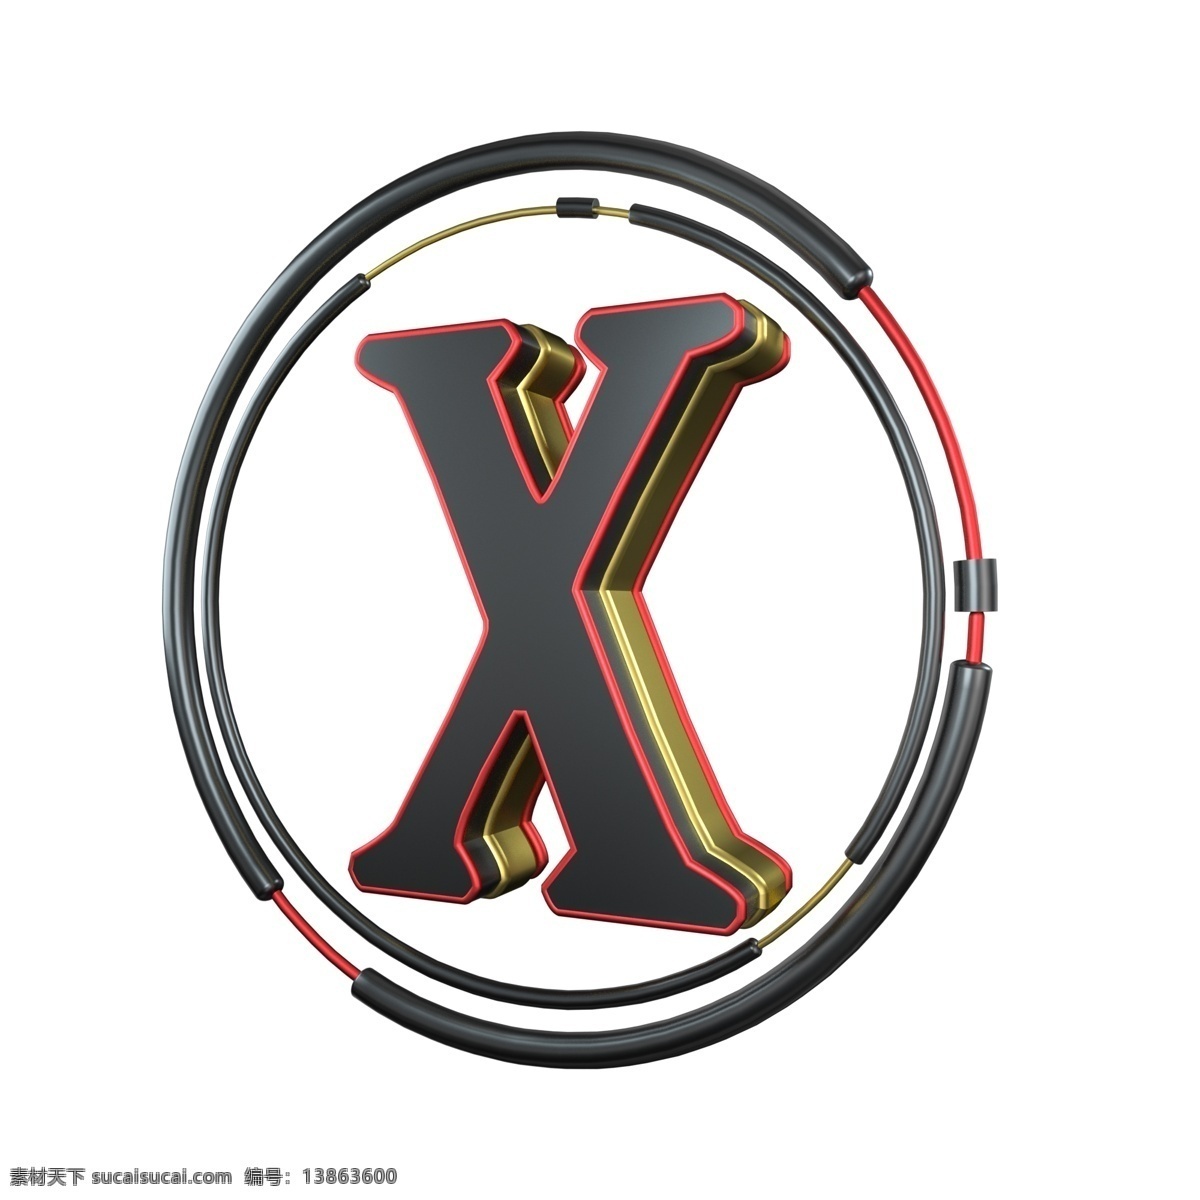 c4d 炫 酷 黑红 金 立体 字母 x 装饰 3d 炫酷 黑色 红色 金色 金属质感 平面海报配图 透明图层 字母x